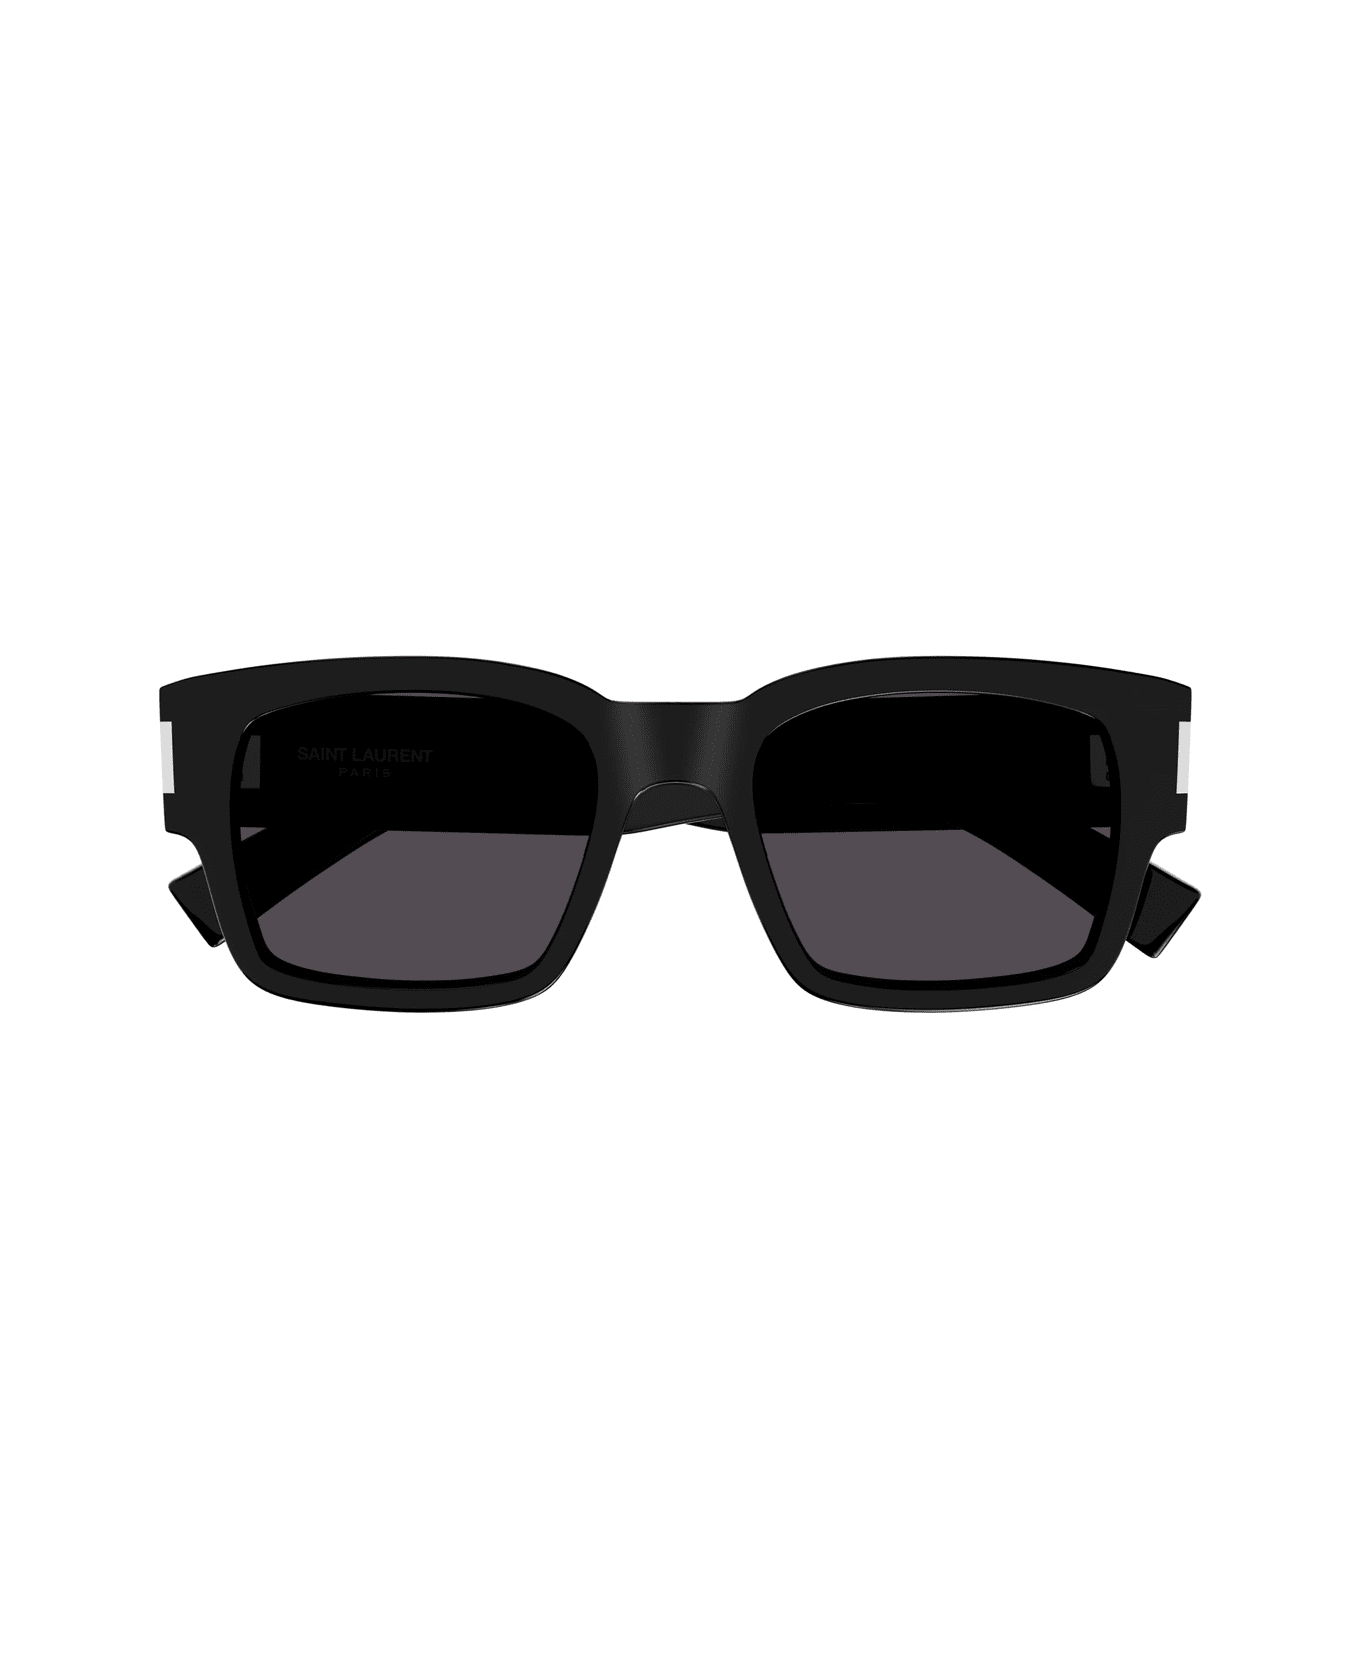 Saint Laurent Eyewear Sl 617 001 Sunglasses vlogo - Nero